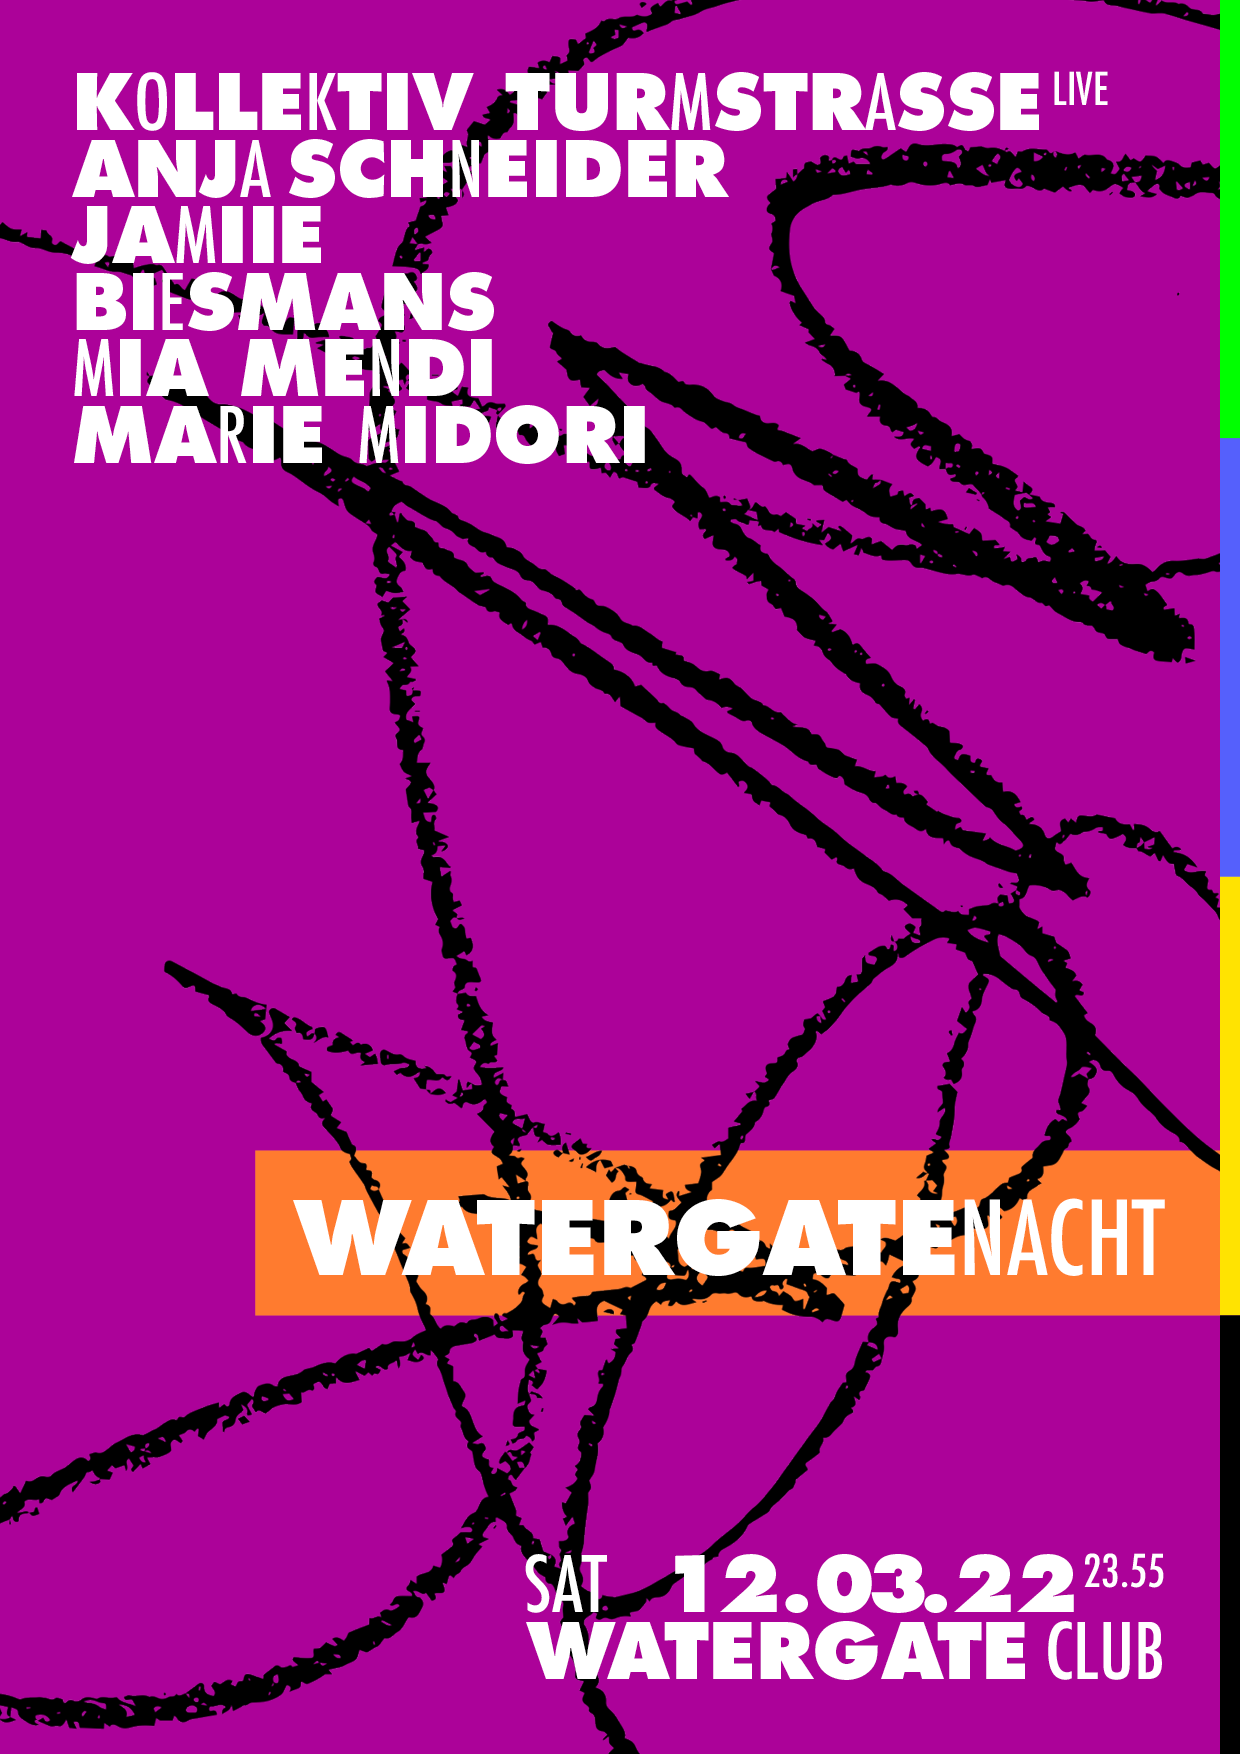 Watergate Nacht: Kollektiv Turmstrasse, Anja Schneider, JAMIIE, Biesmans, Mia Mendi - フライヤー表